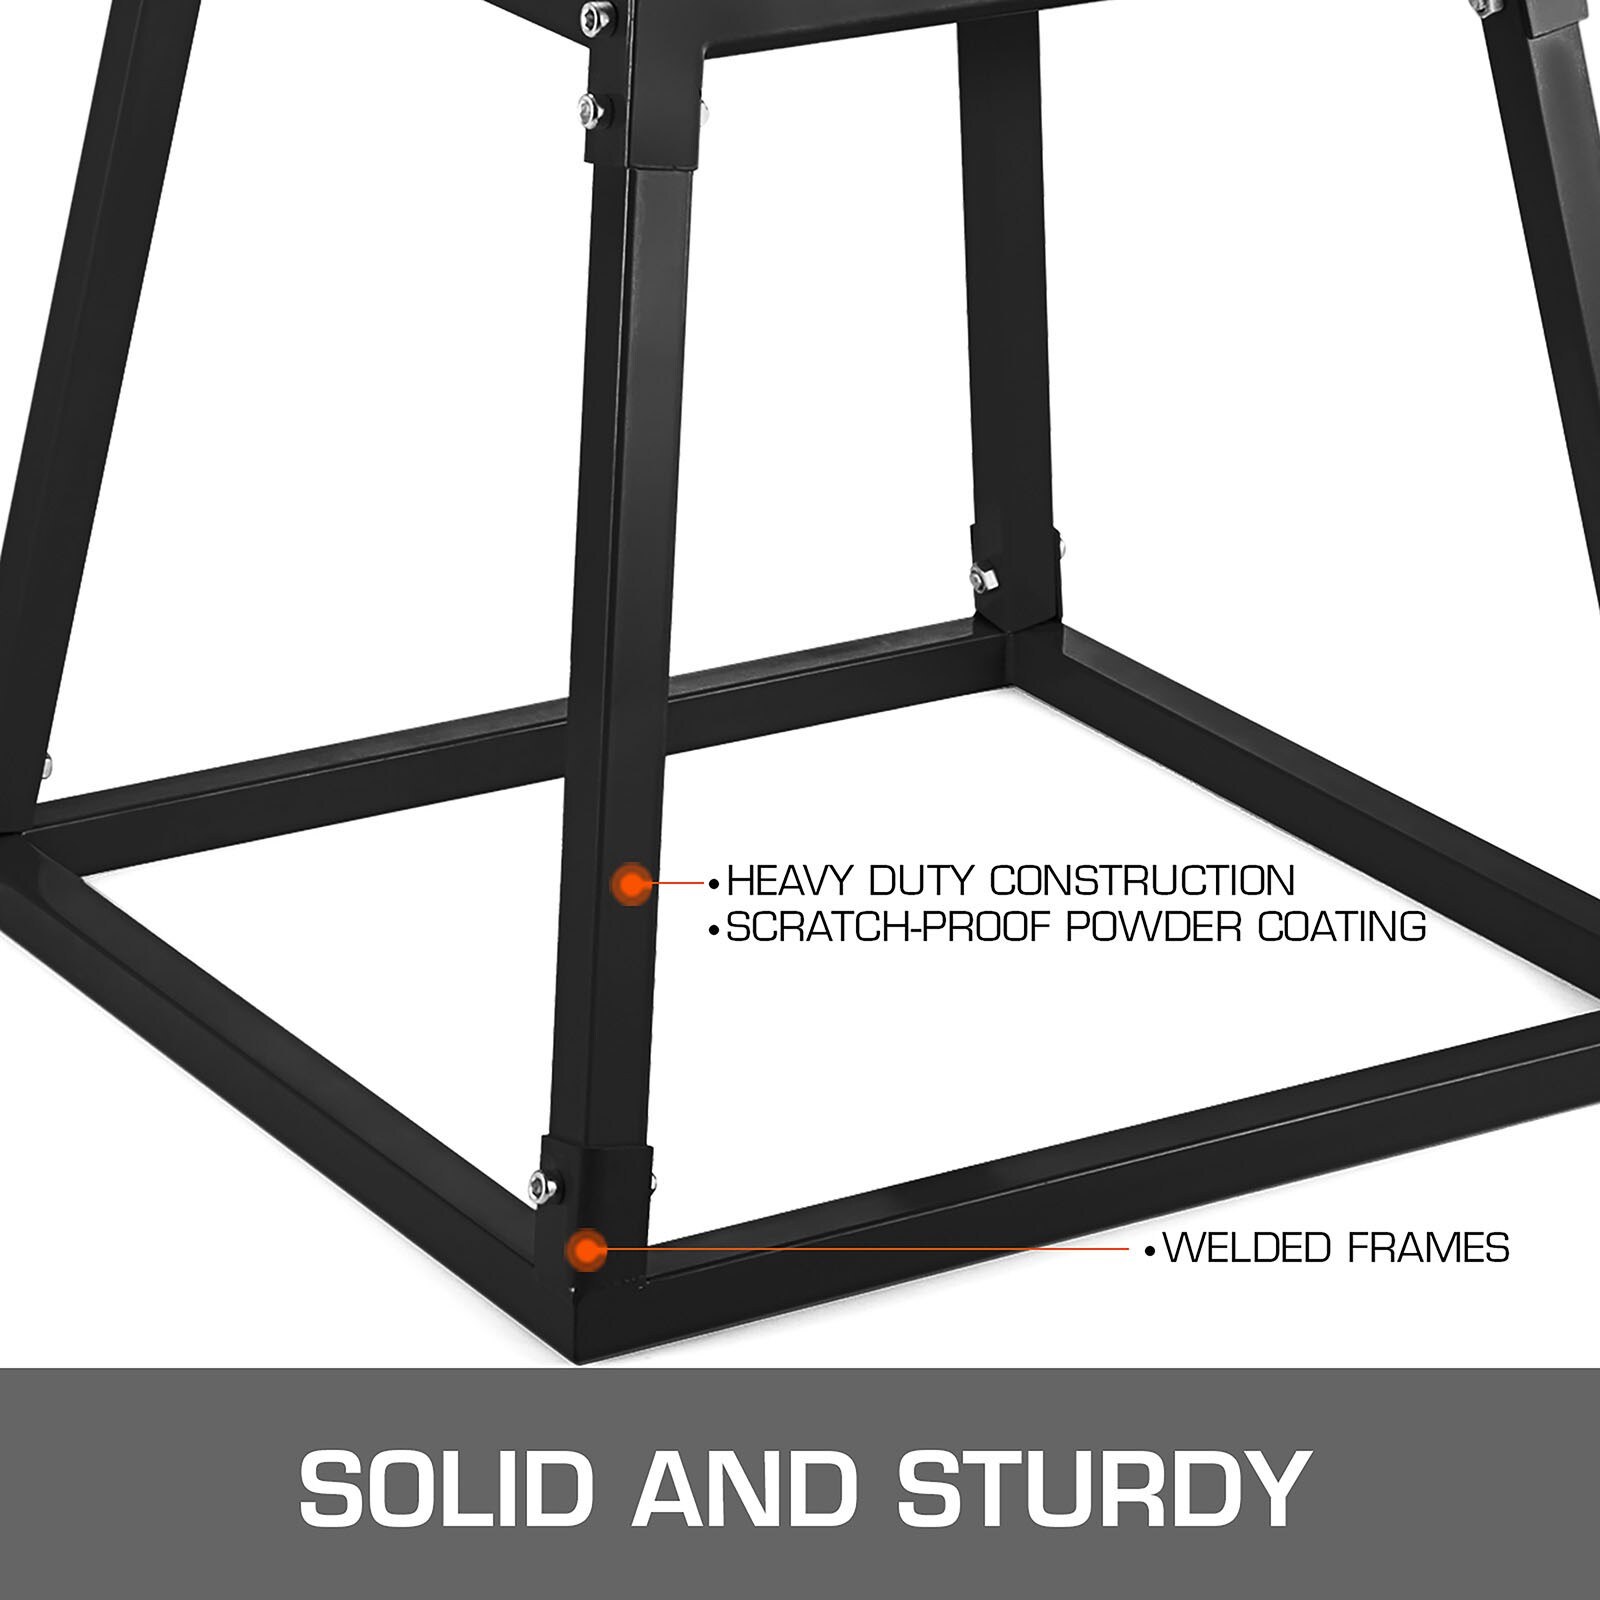 GoSports Fitness Wood Plyo Jump Box - Adjustable Height –